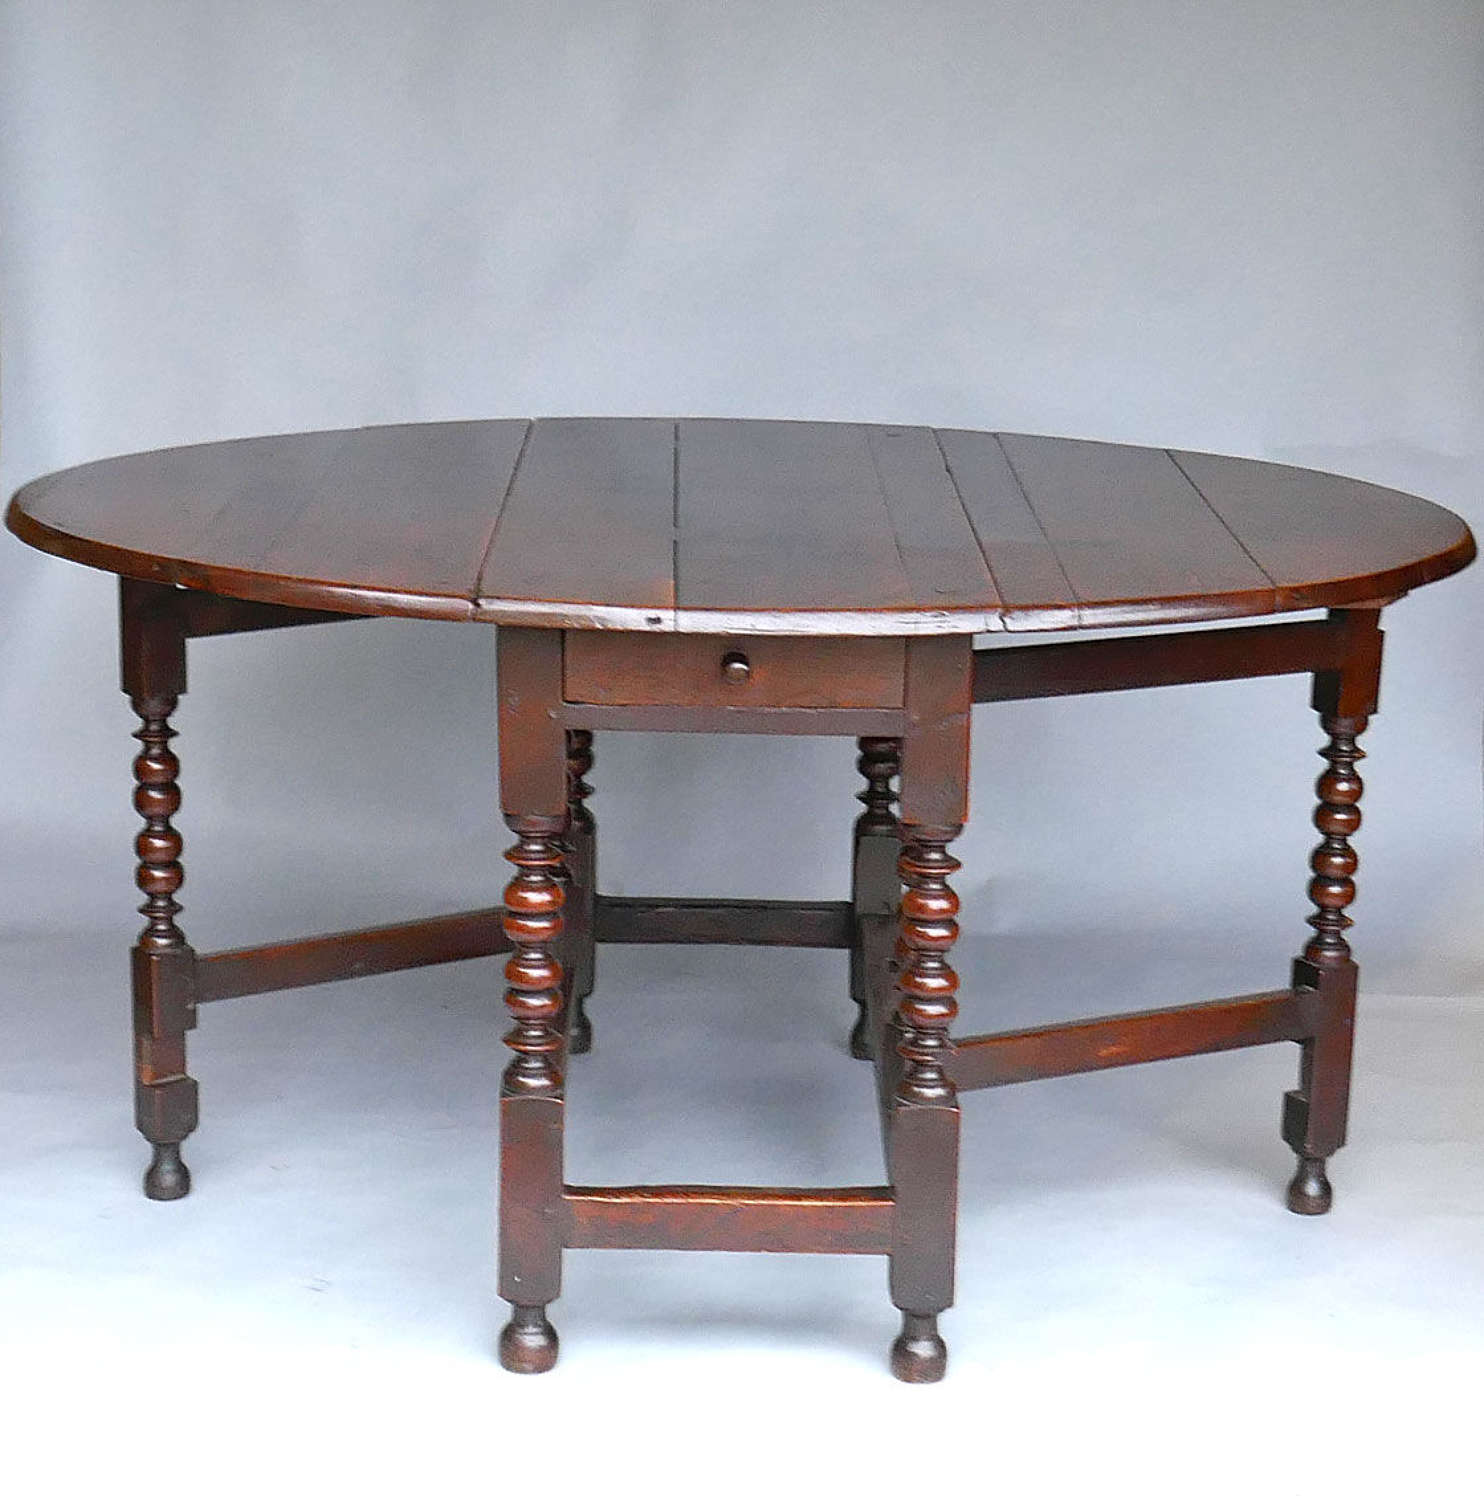 Antique Oak & Country Furniture 17thc Gateleg Table. English C1660-80.